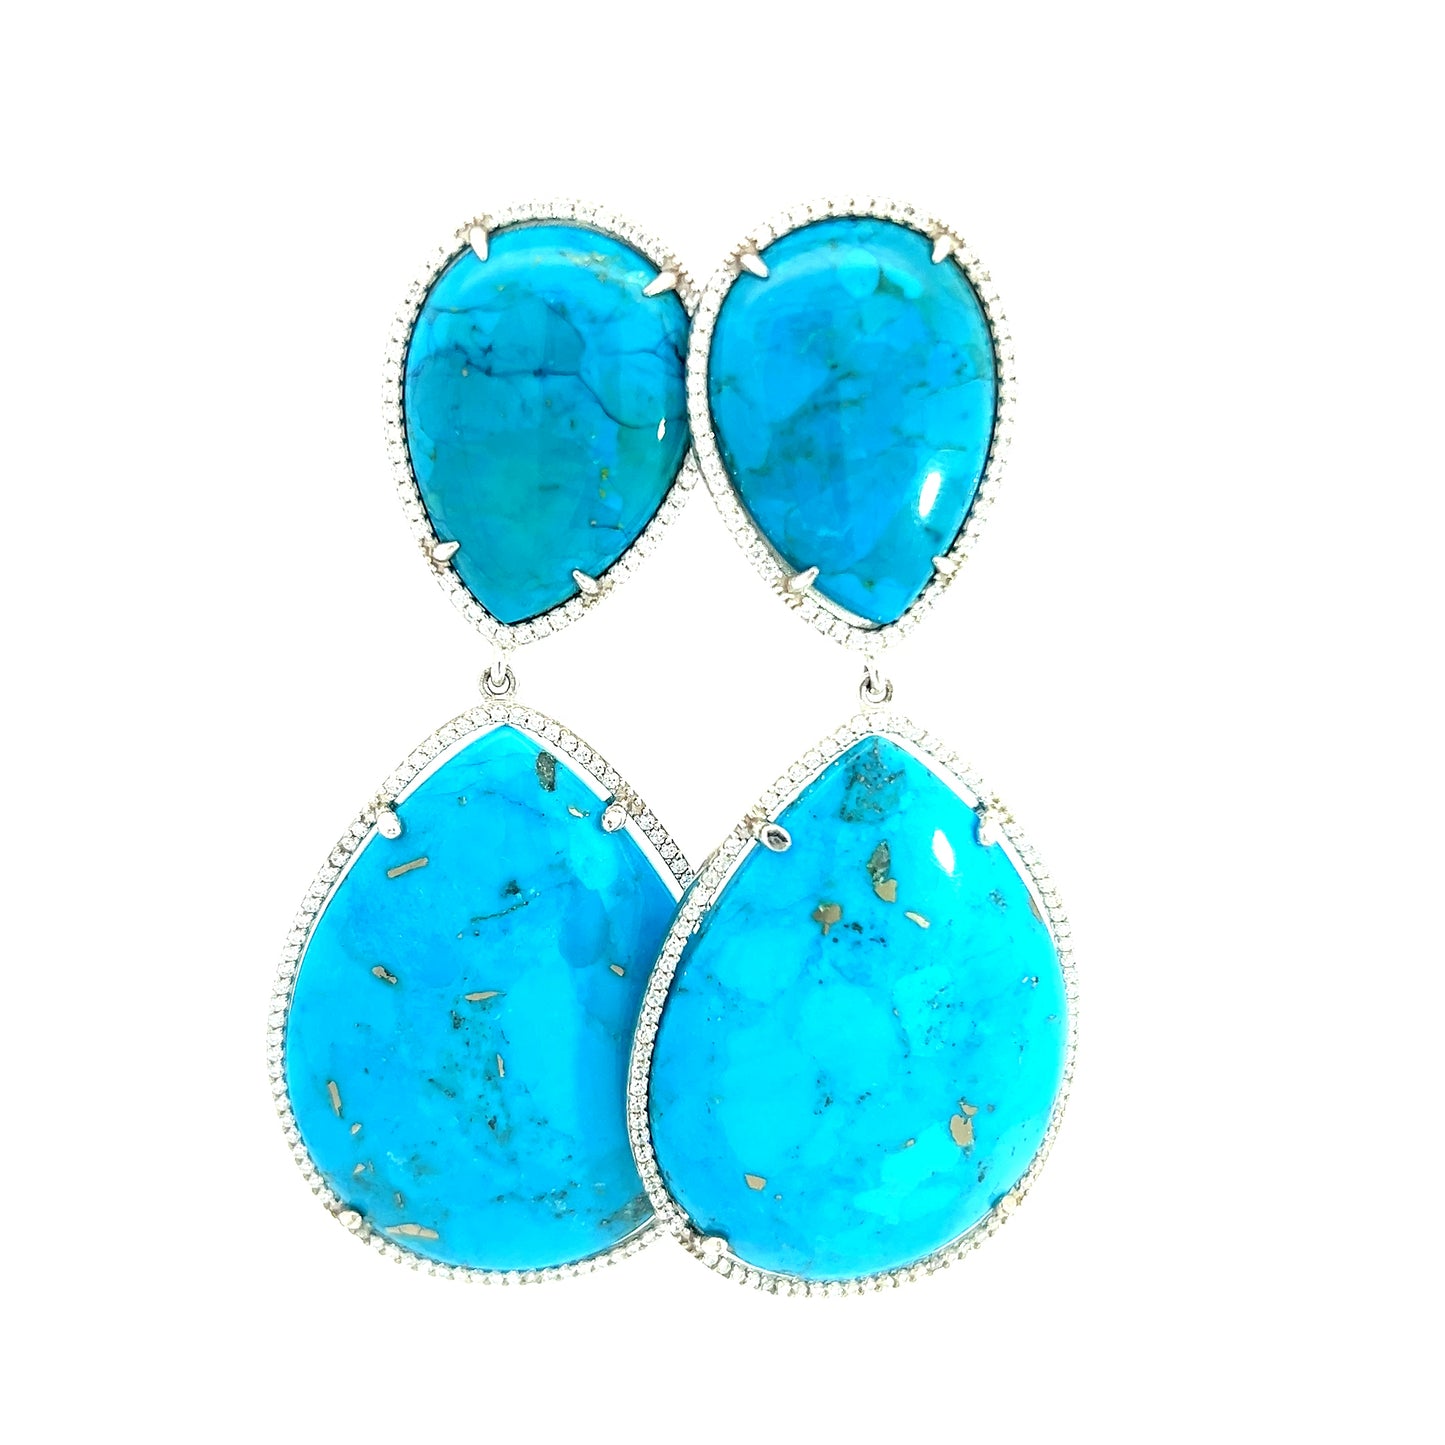 Turquoise Color Rhinestone Statement Earrings | eBay